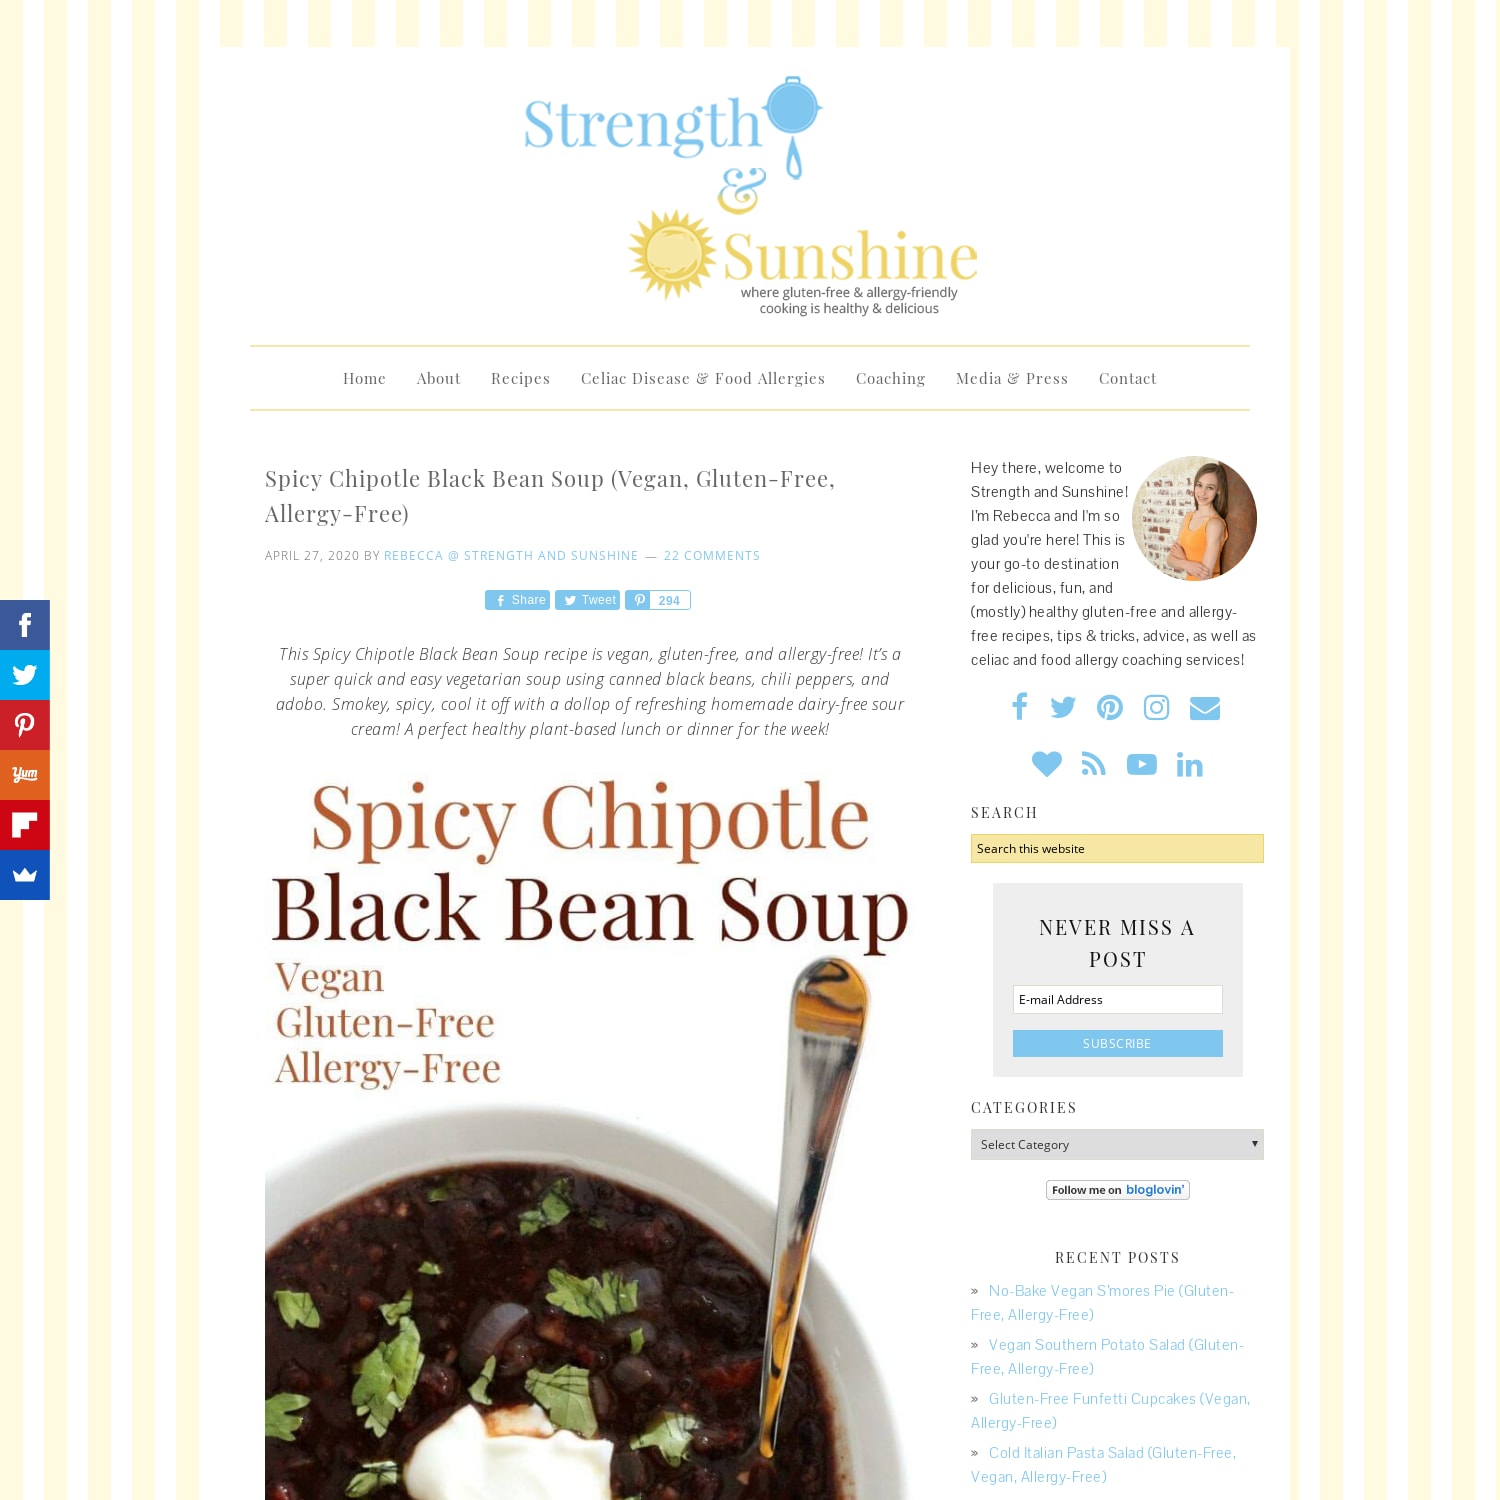 Spicy Chipotle Black Bean Soup (Vegan, Gluten-Free, Allergy-Free)